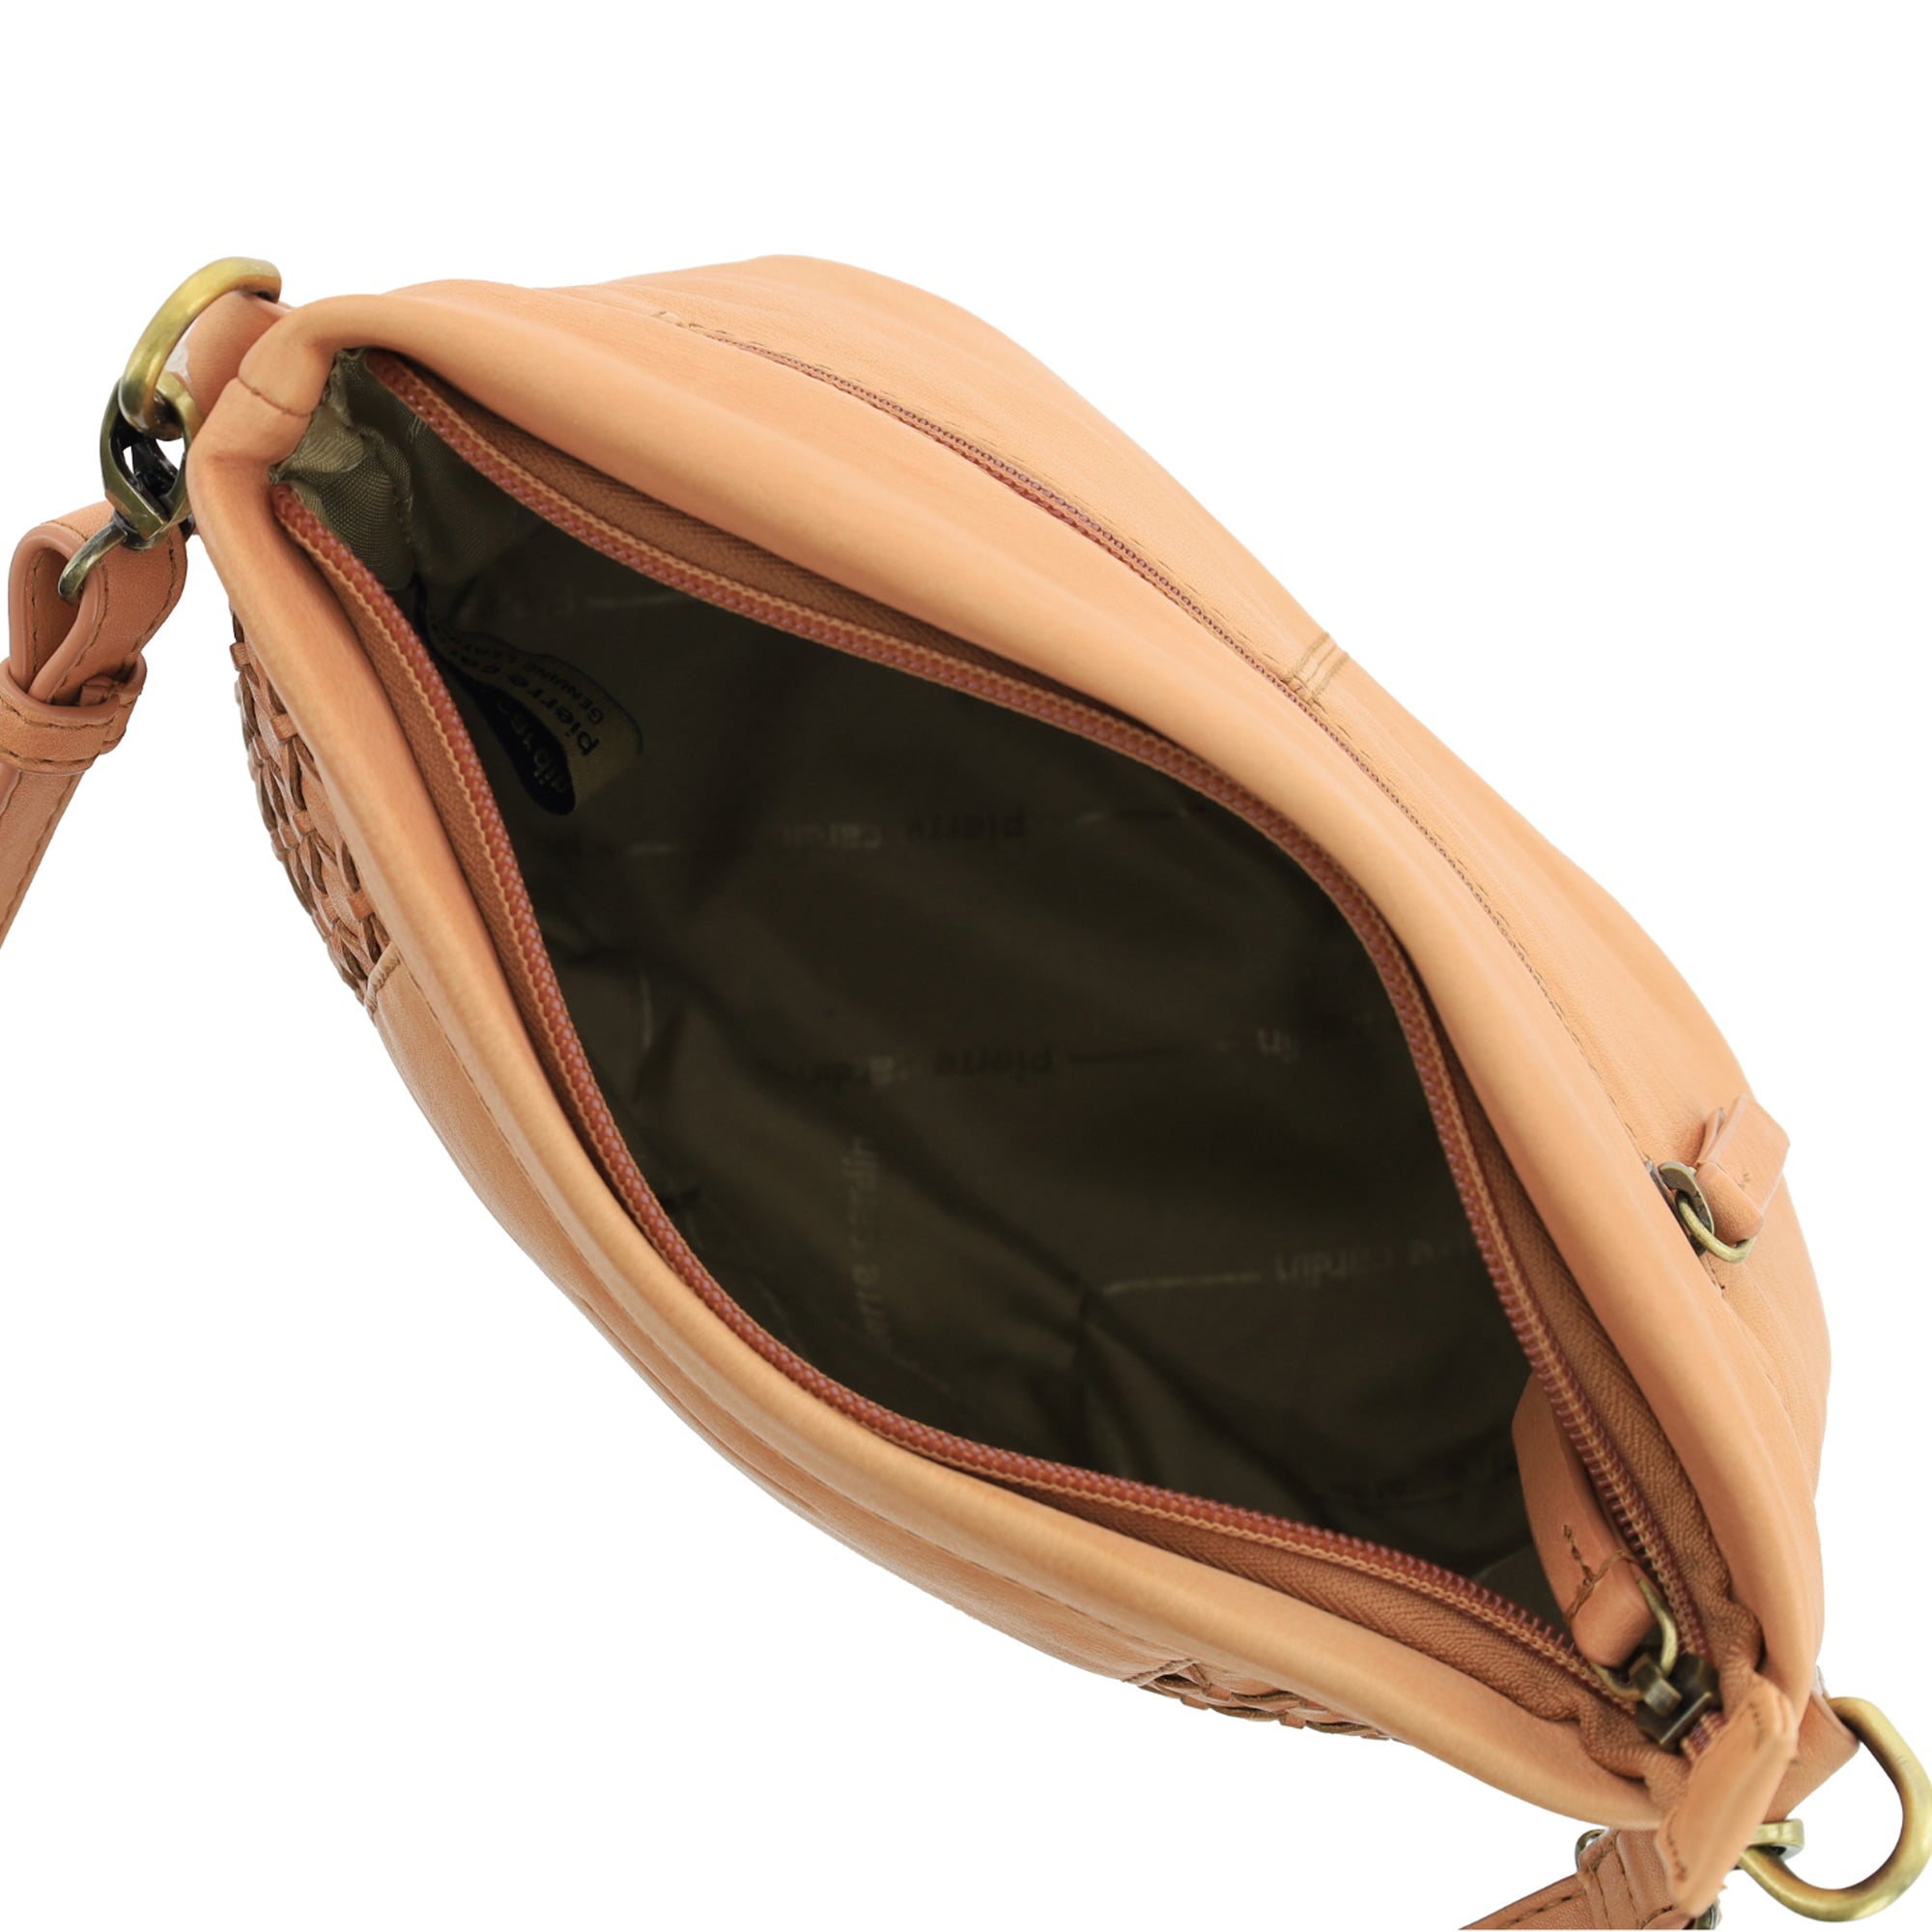 Pierre Cardin Leather Embossed Crossbody Bag in Marsala